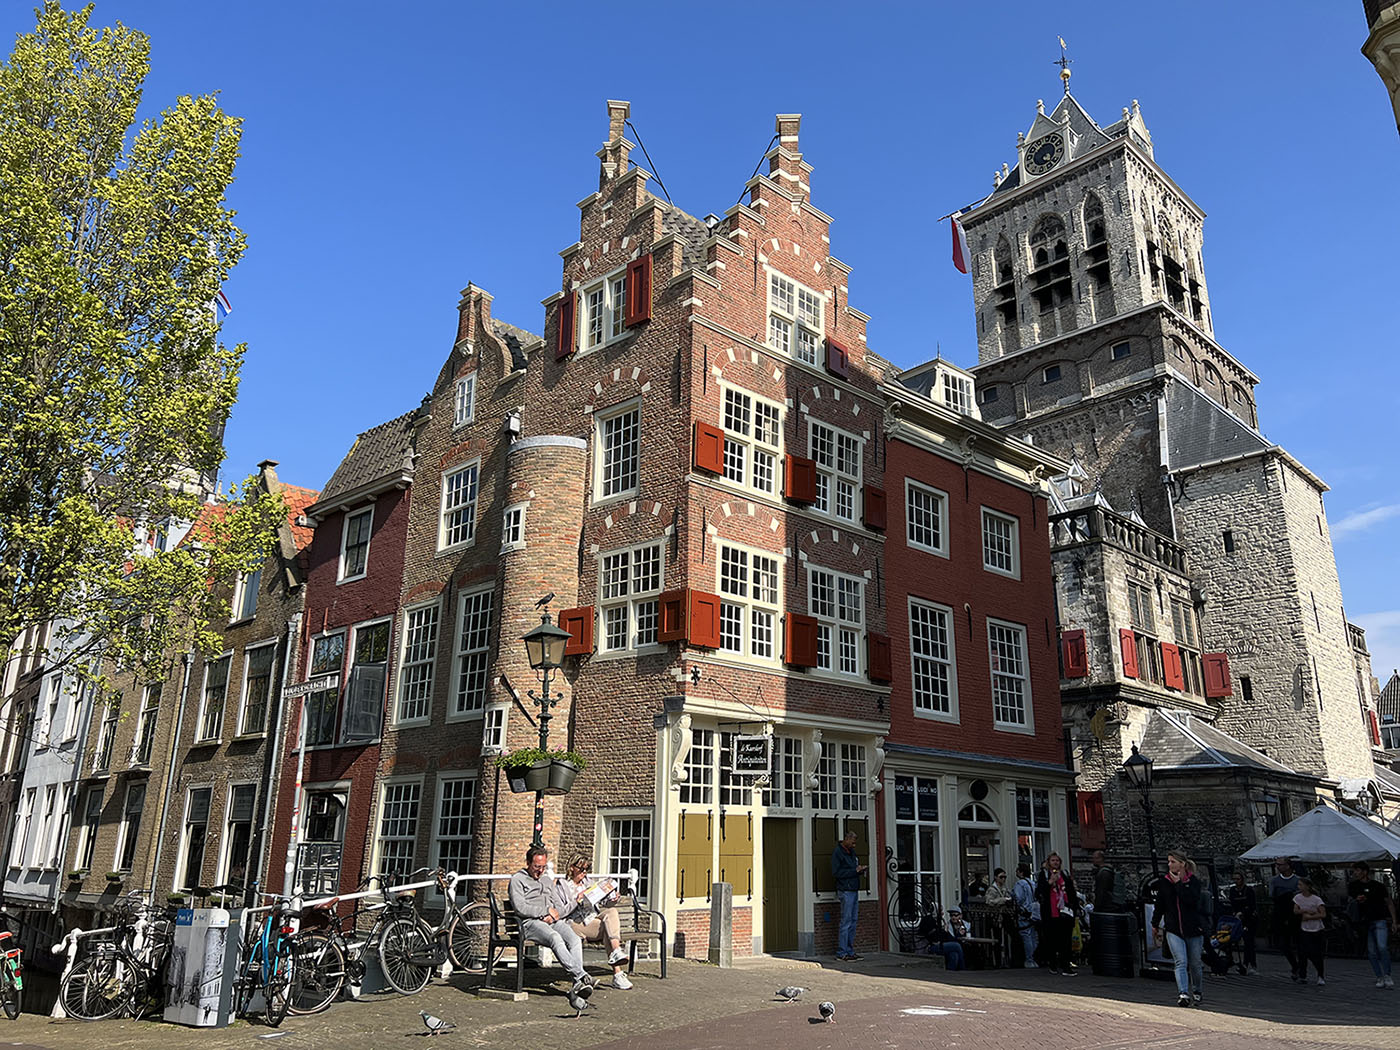 Beautiful streets of Delft, Netherlands. Credit: Carolina Valenzuela